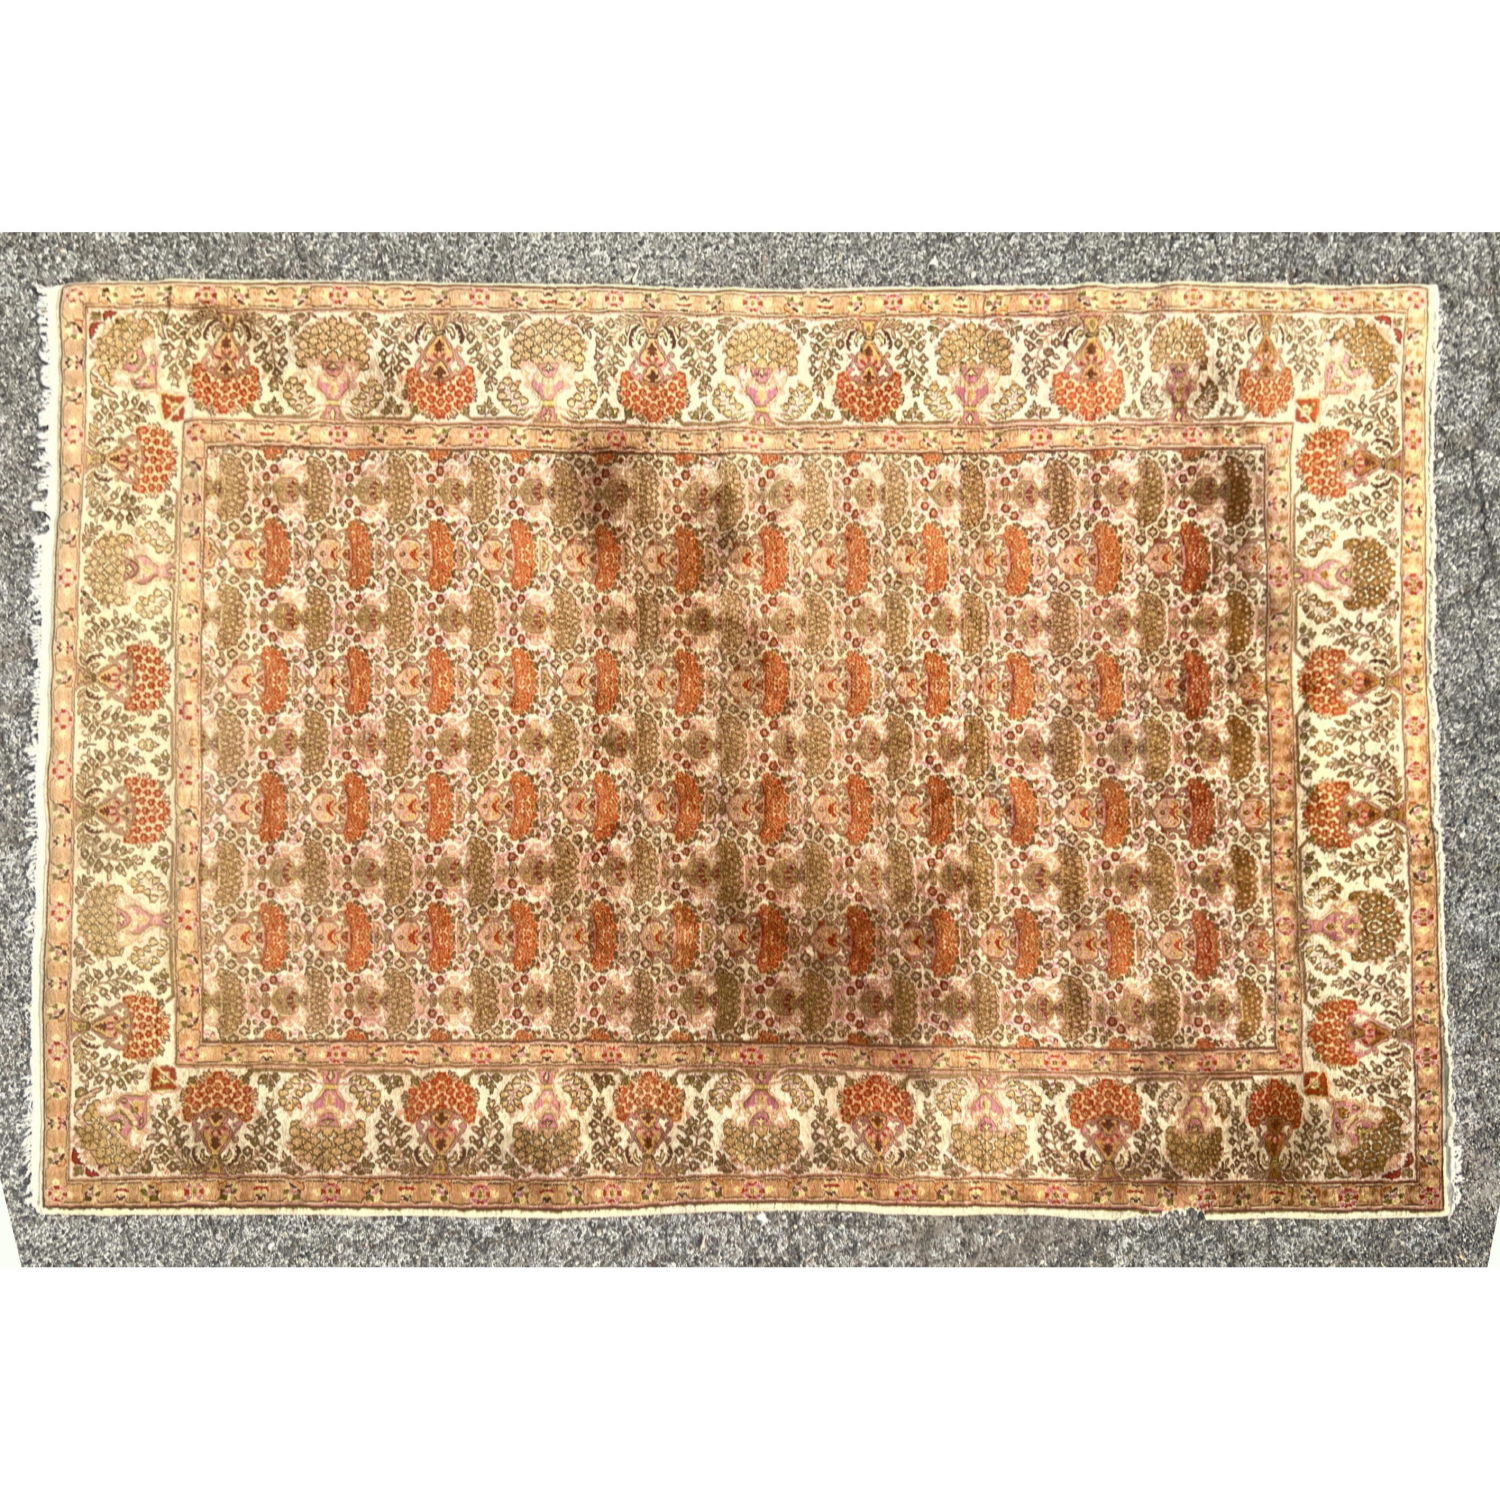 9 7 x 6 Handmade Carpet Rug Tan 2ff8da